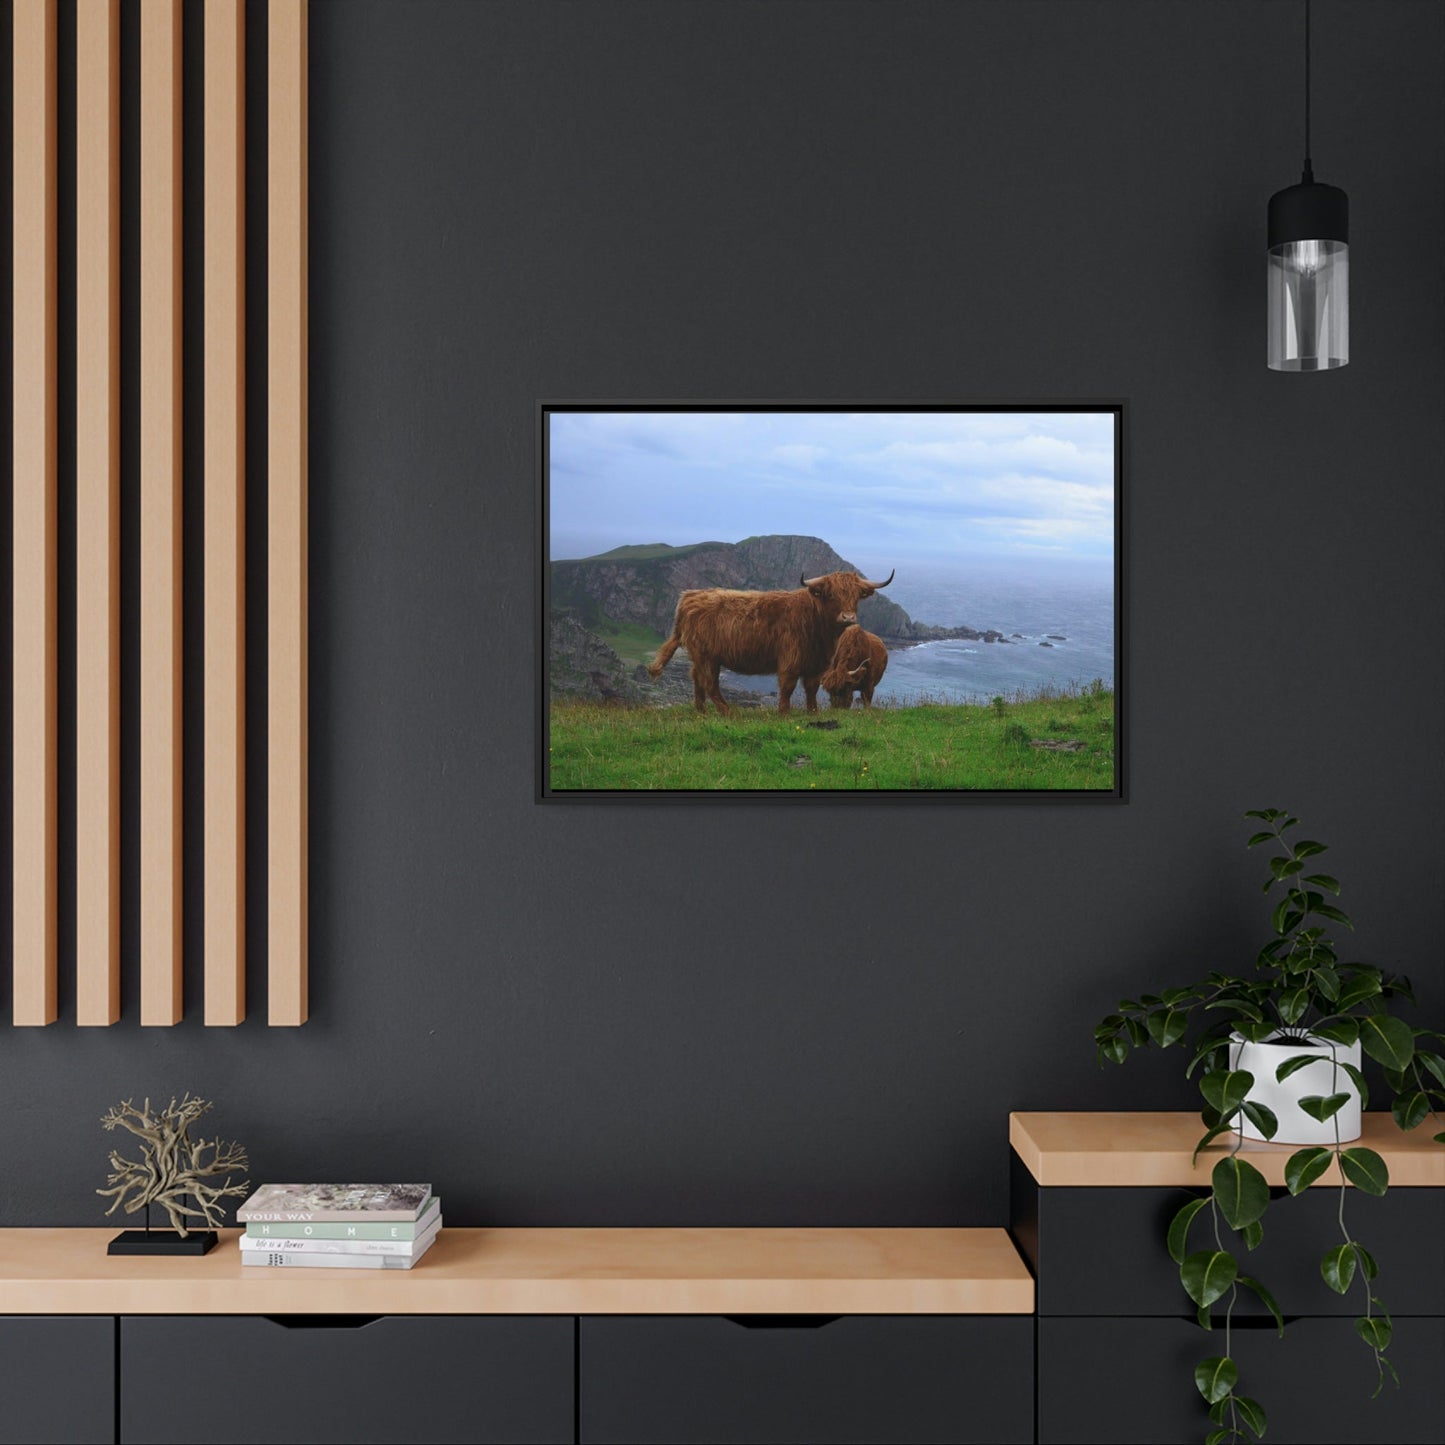 Highland Cow Portrait: Elegant Print on Natural Canvas